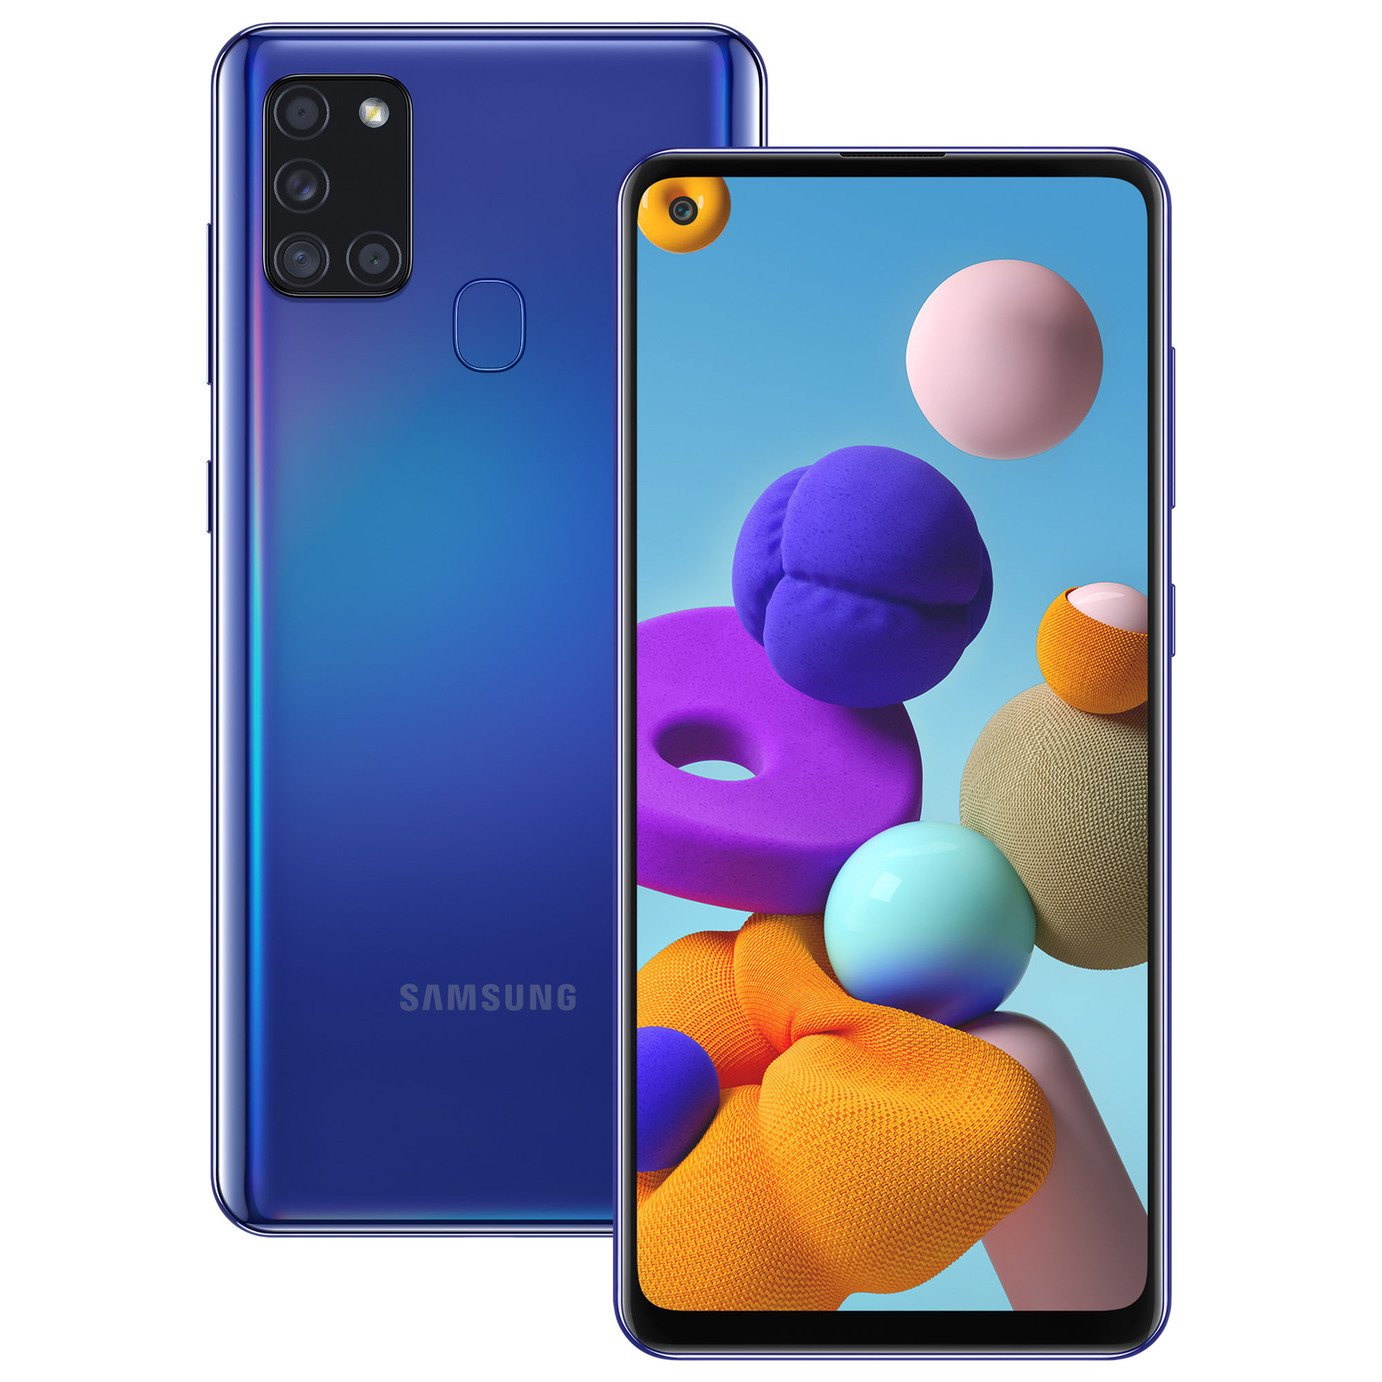 SIM Free Samsung A21s Mobile Phone - Blue